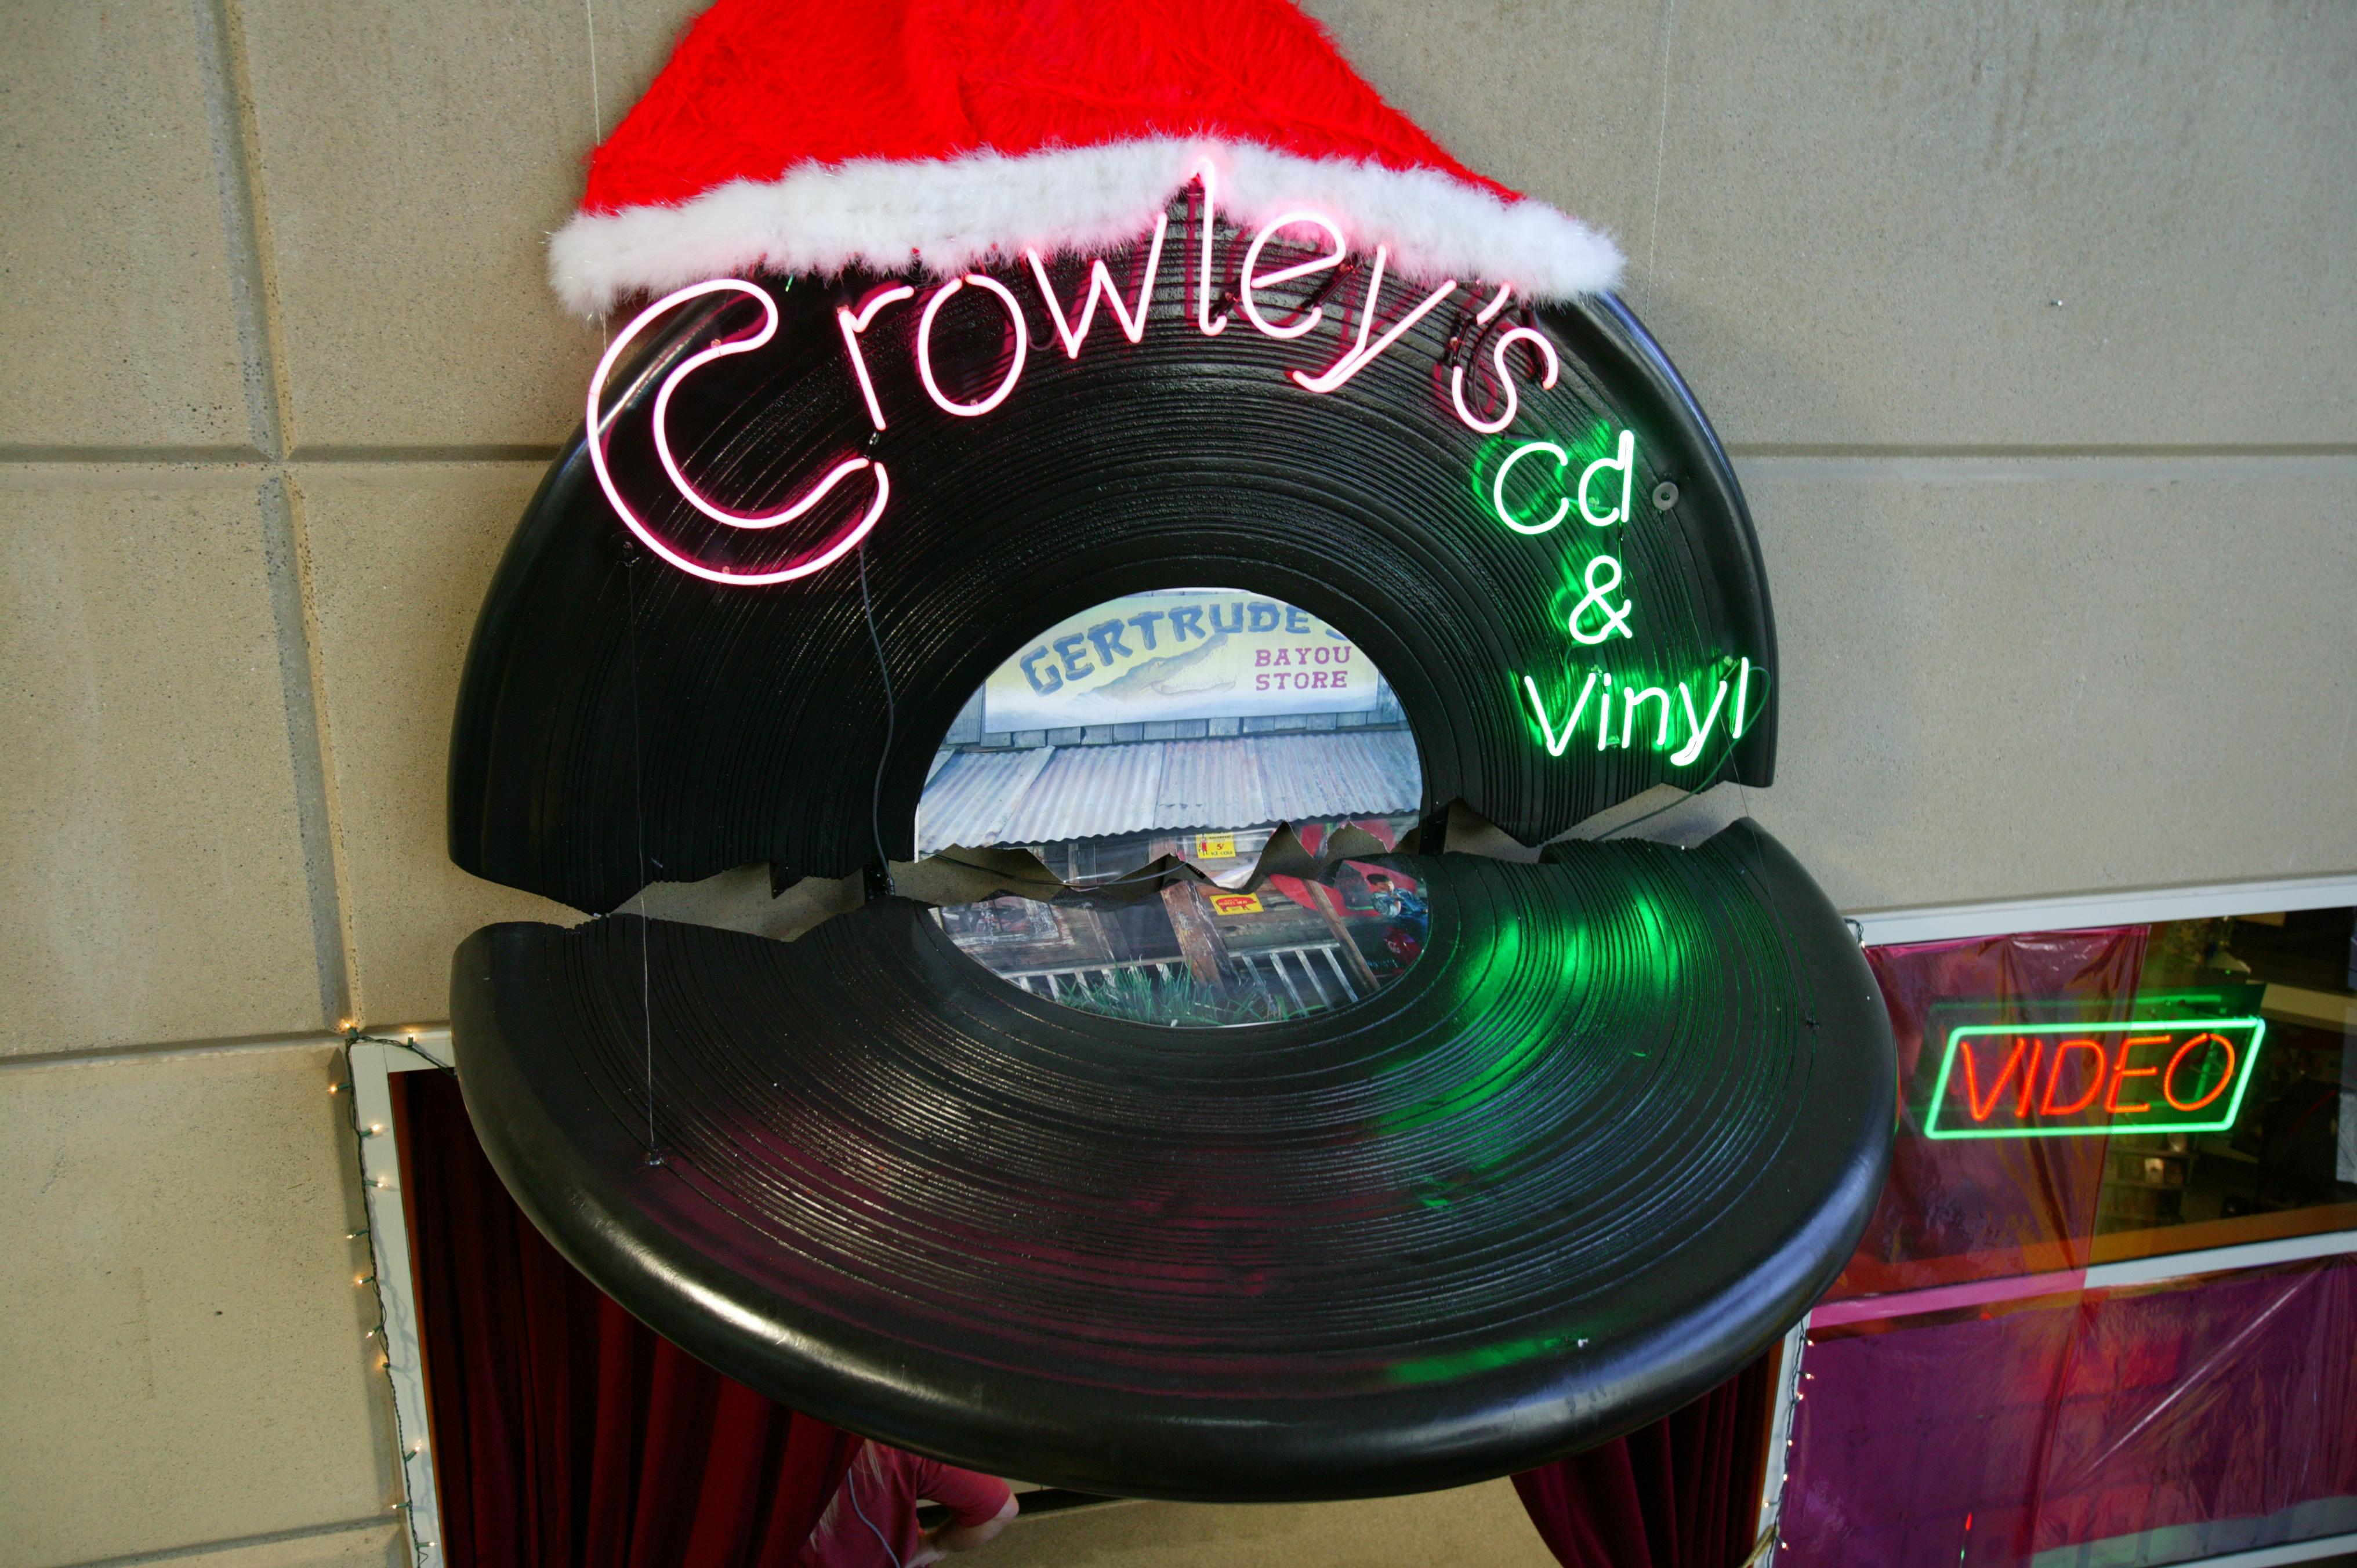 Crowley's CD & Vinyl from 